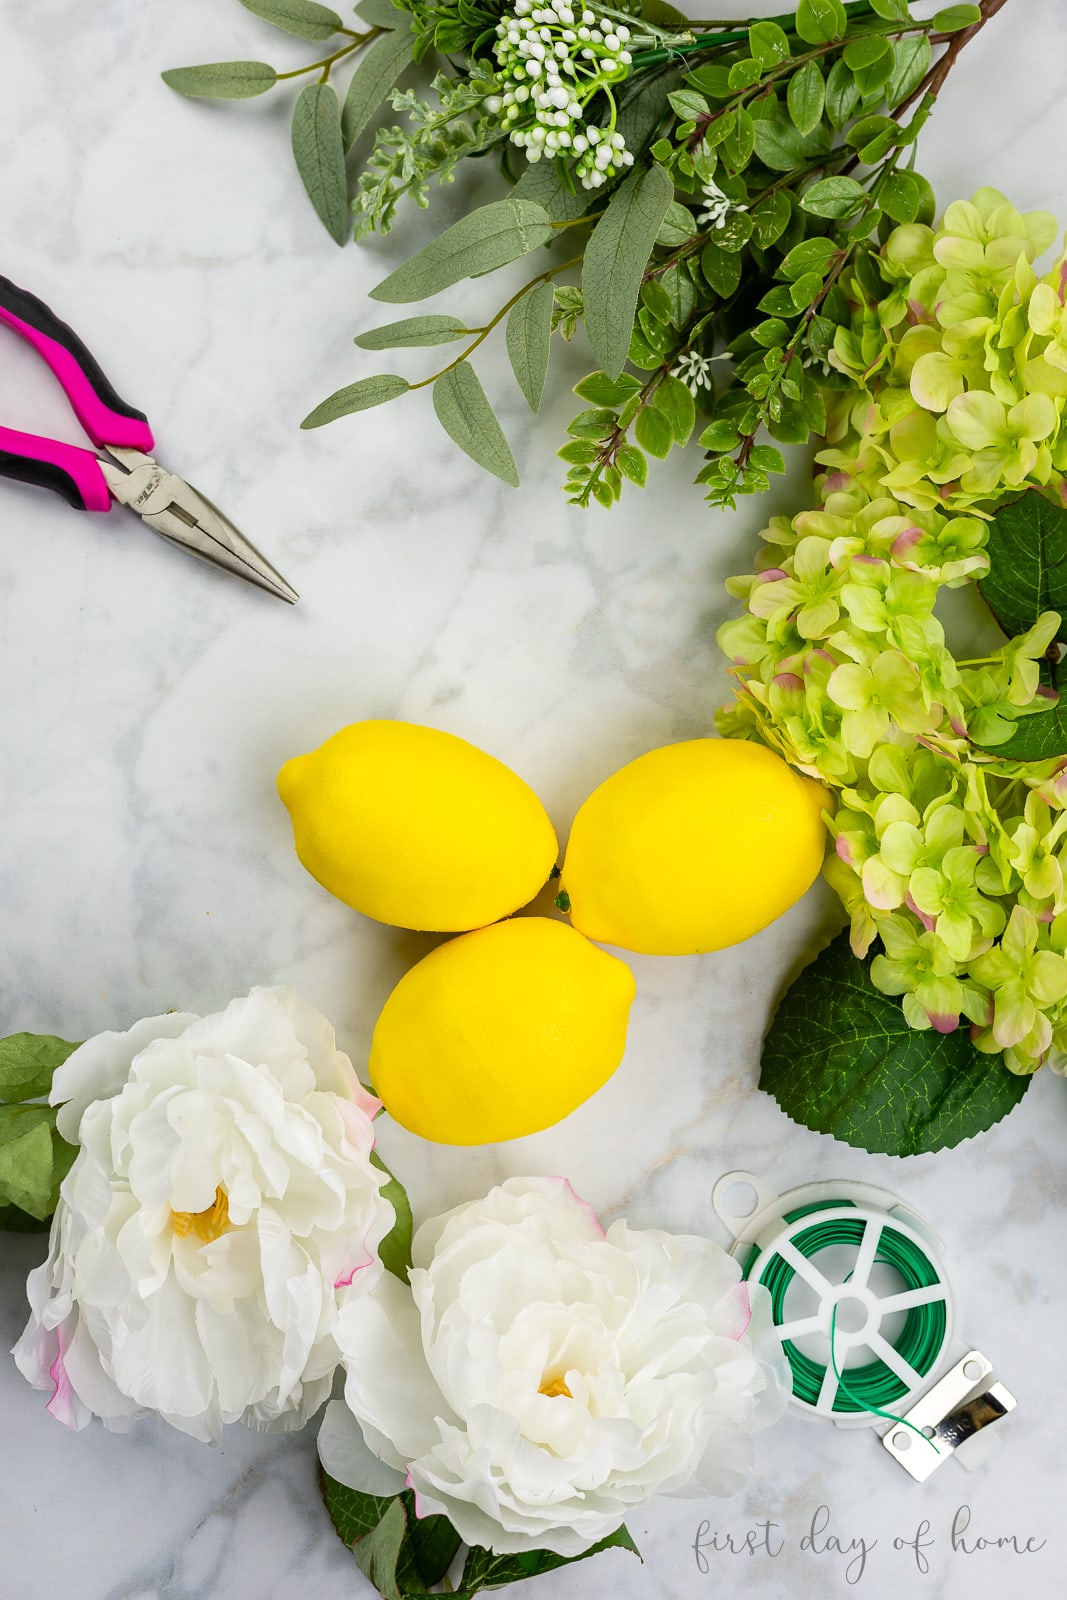 DIY wreath supplies, including faux lemons, hydrangeas, and greenery